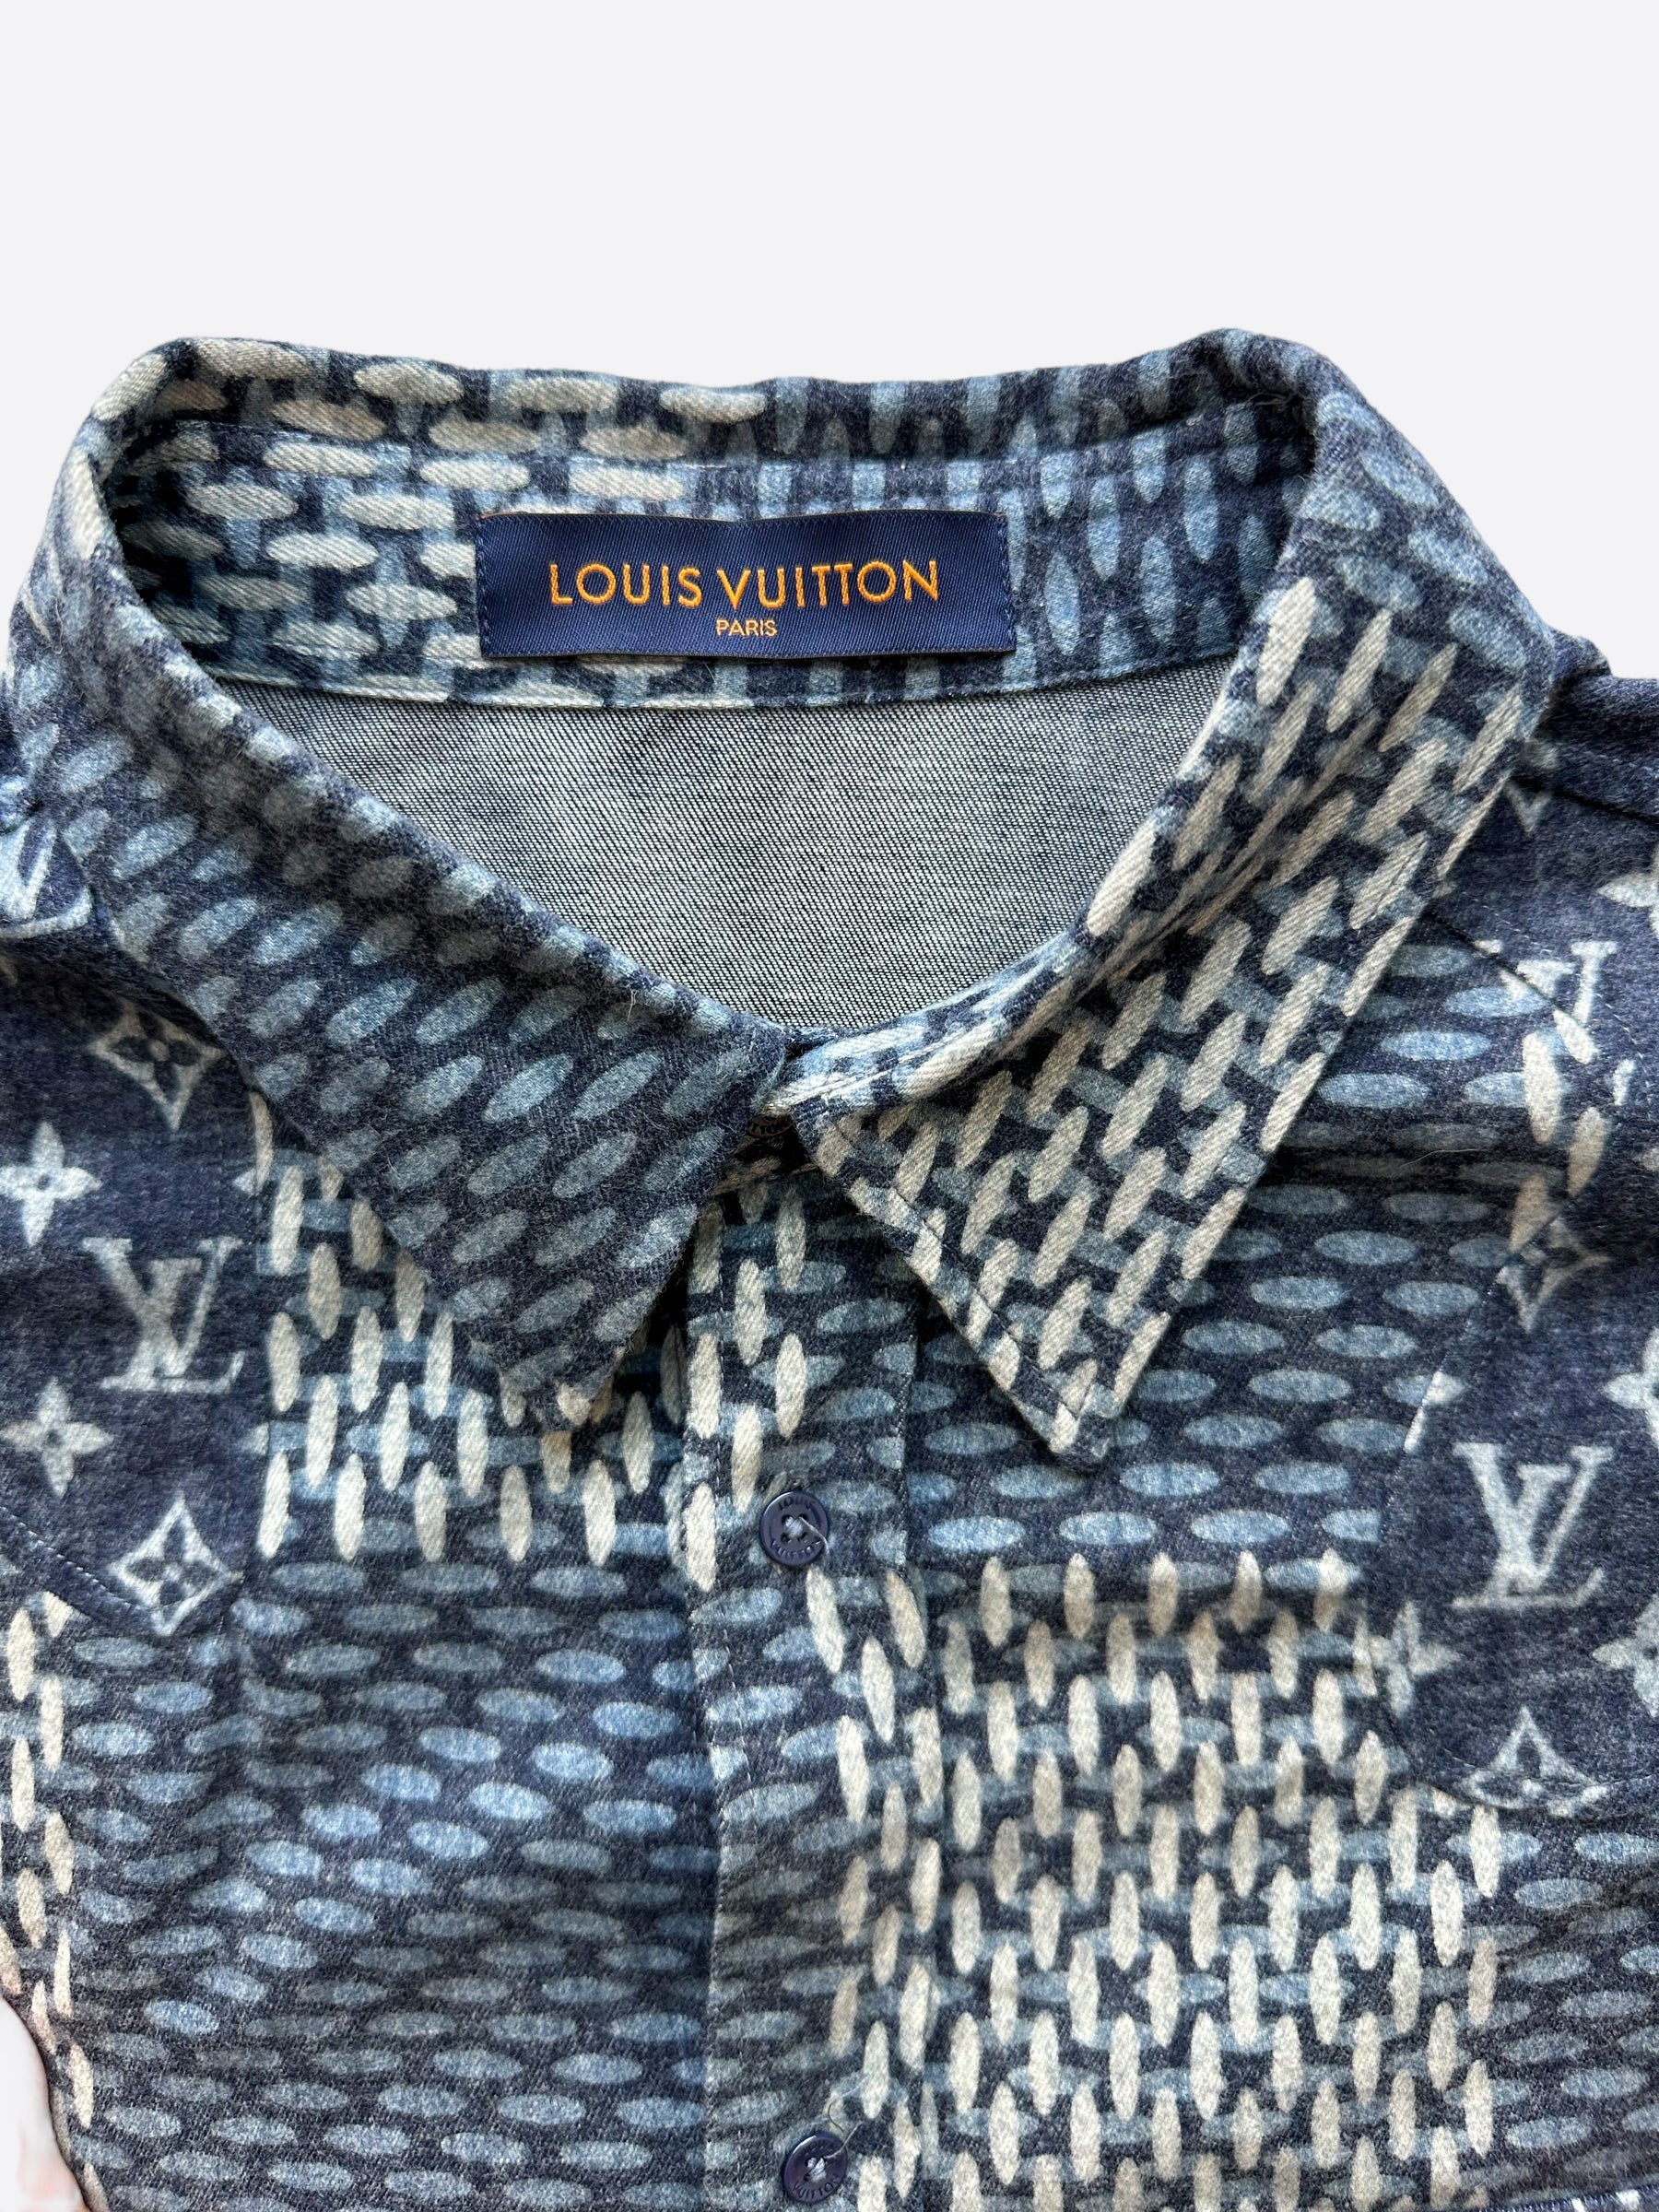 Louis Vuitton to show during Mens Fashion Week in Paris  Vogue Business